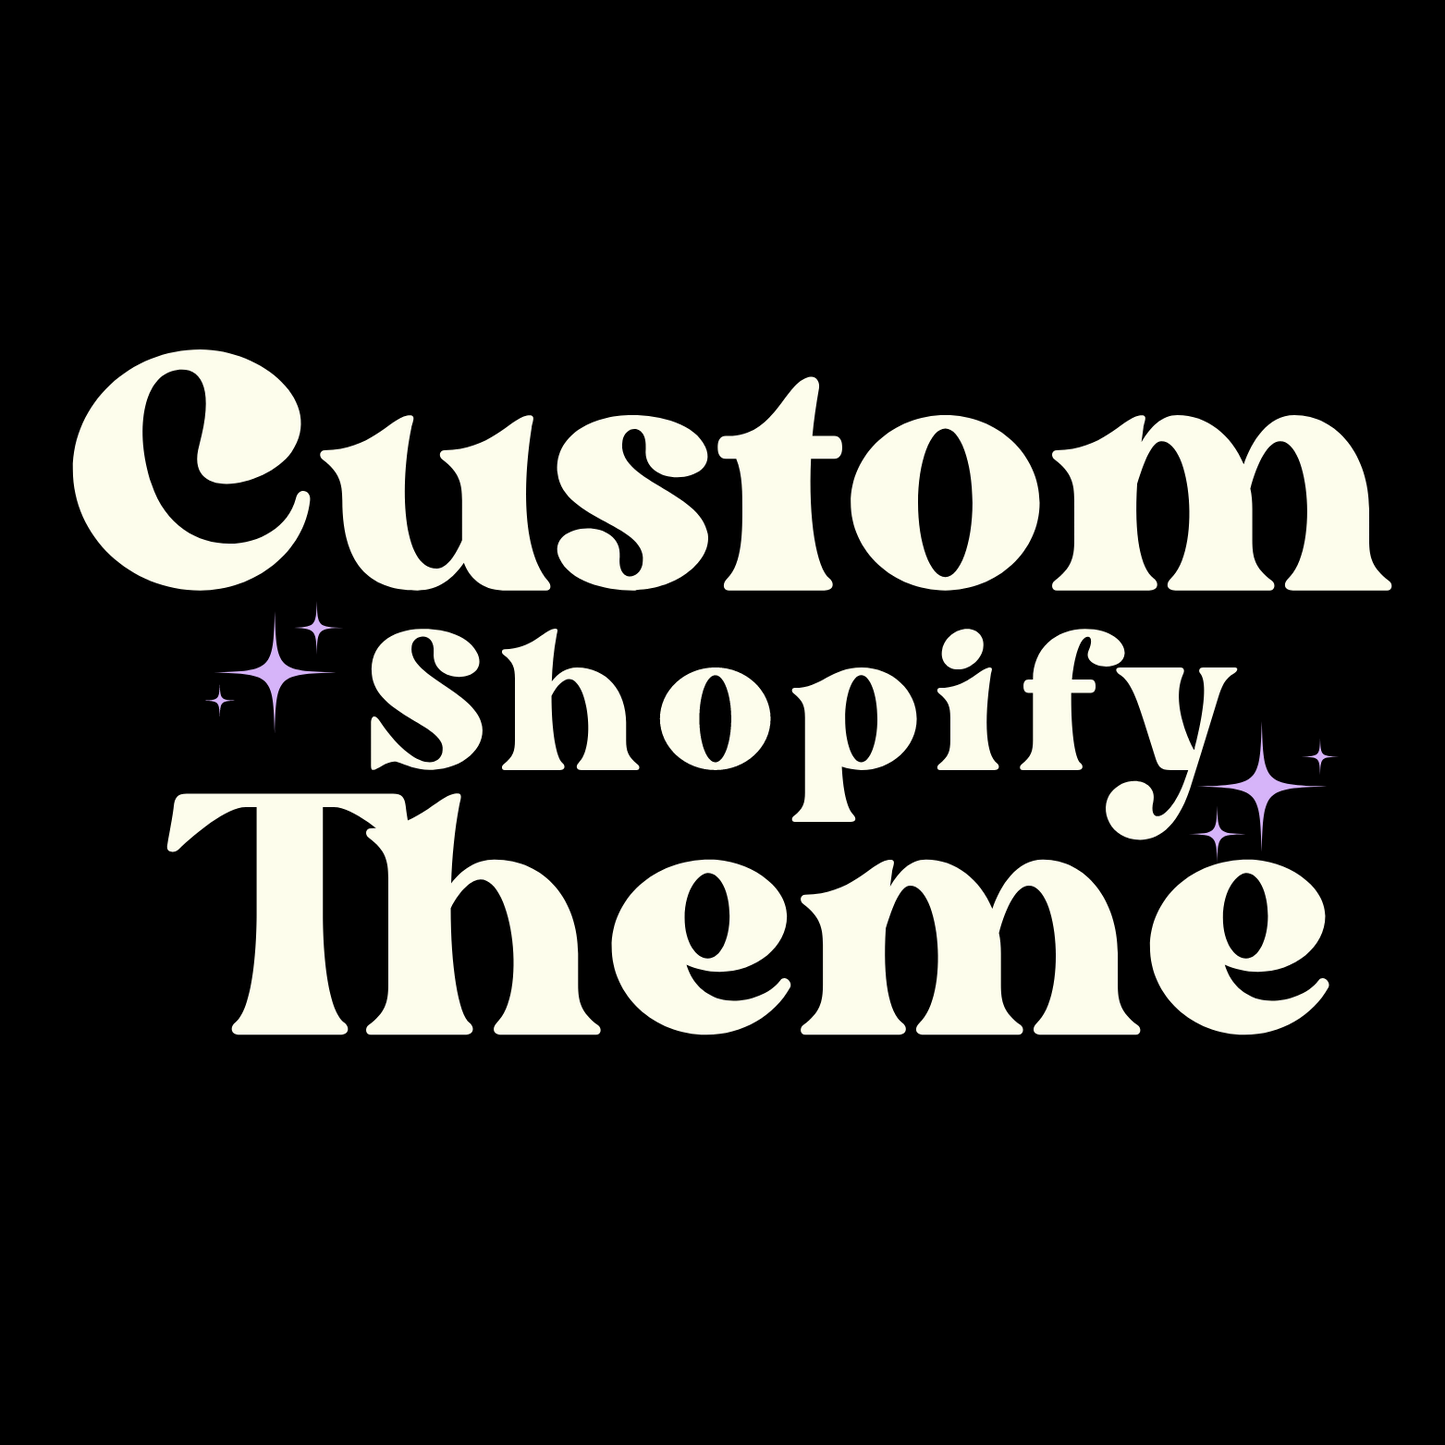 Shopify Theme + Install